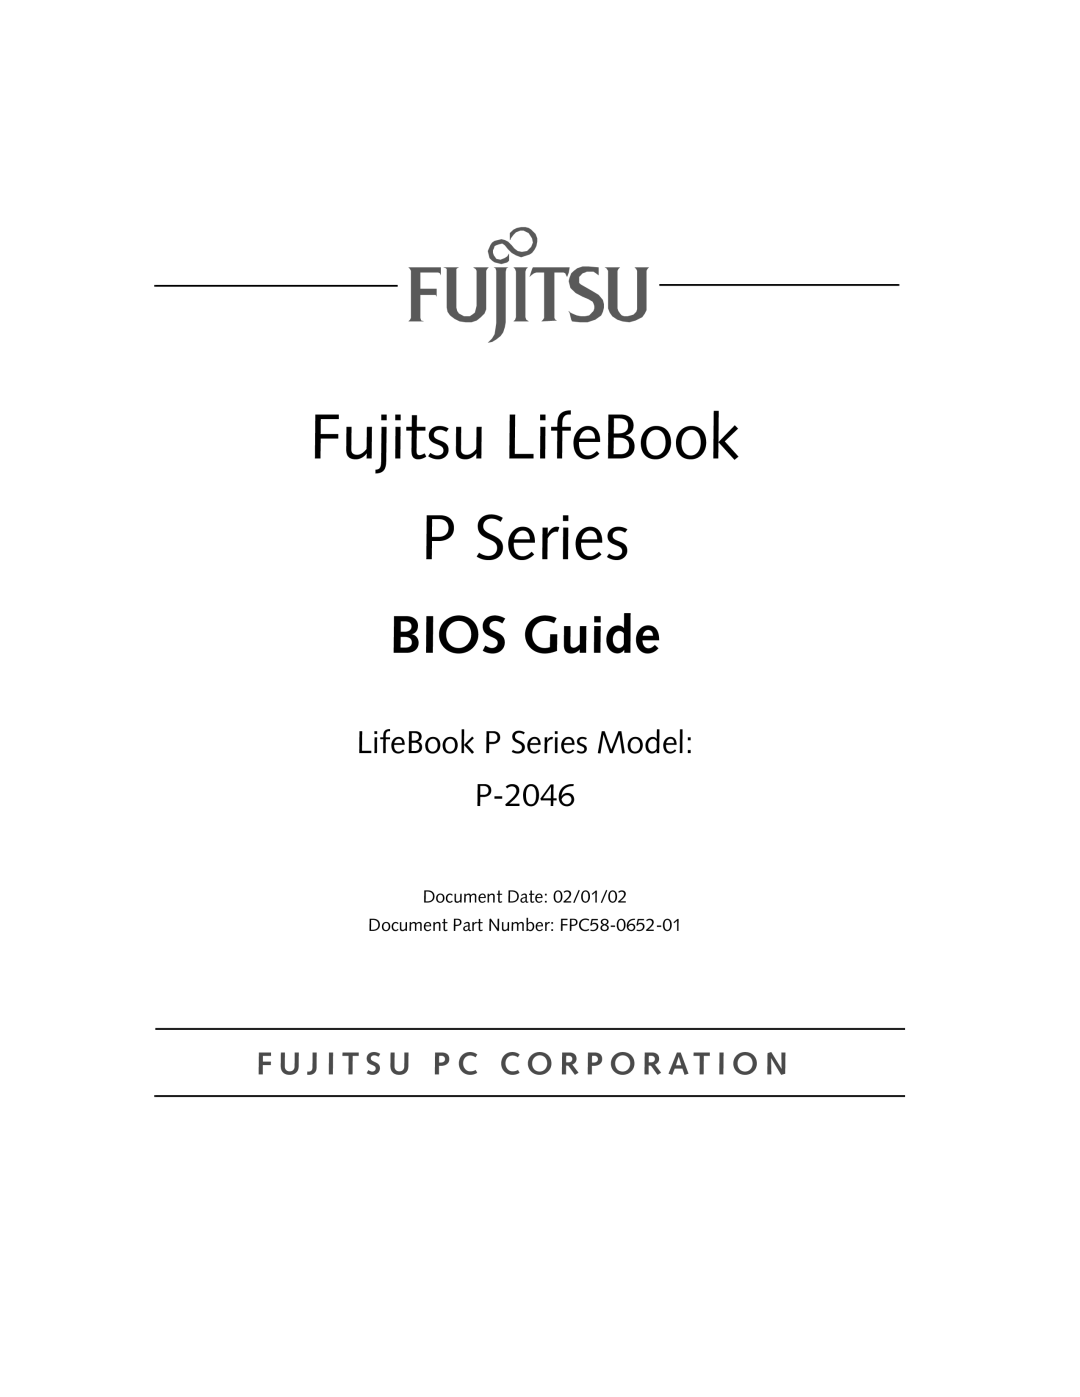 Fujitsu manual Fujitsu LifeBook, BIOS Guide, LifeBook P Series Model P-2046, F U J I T S U P C C O R P O R At I O N 